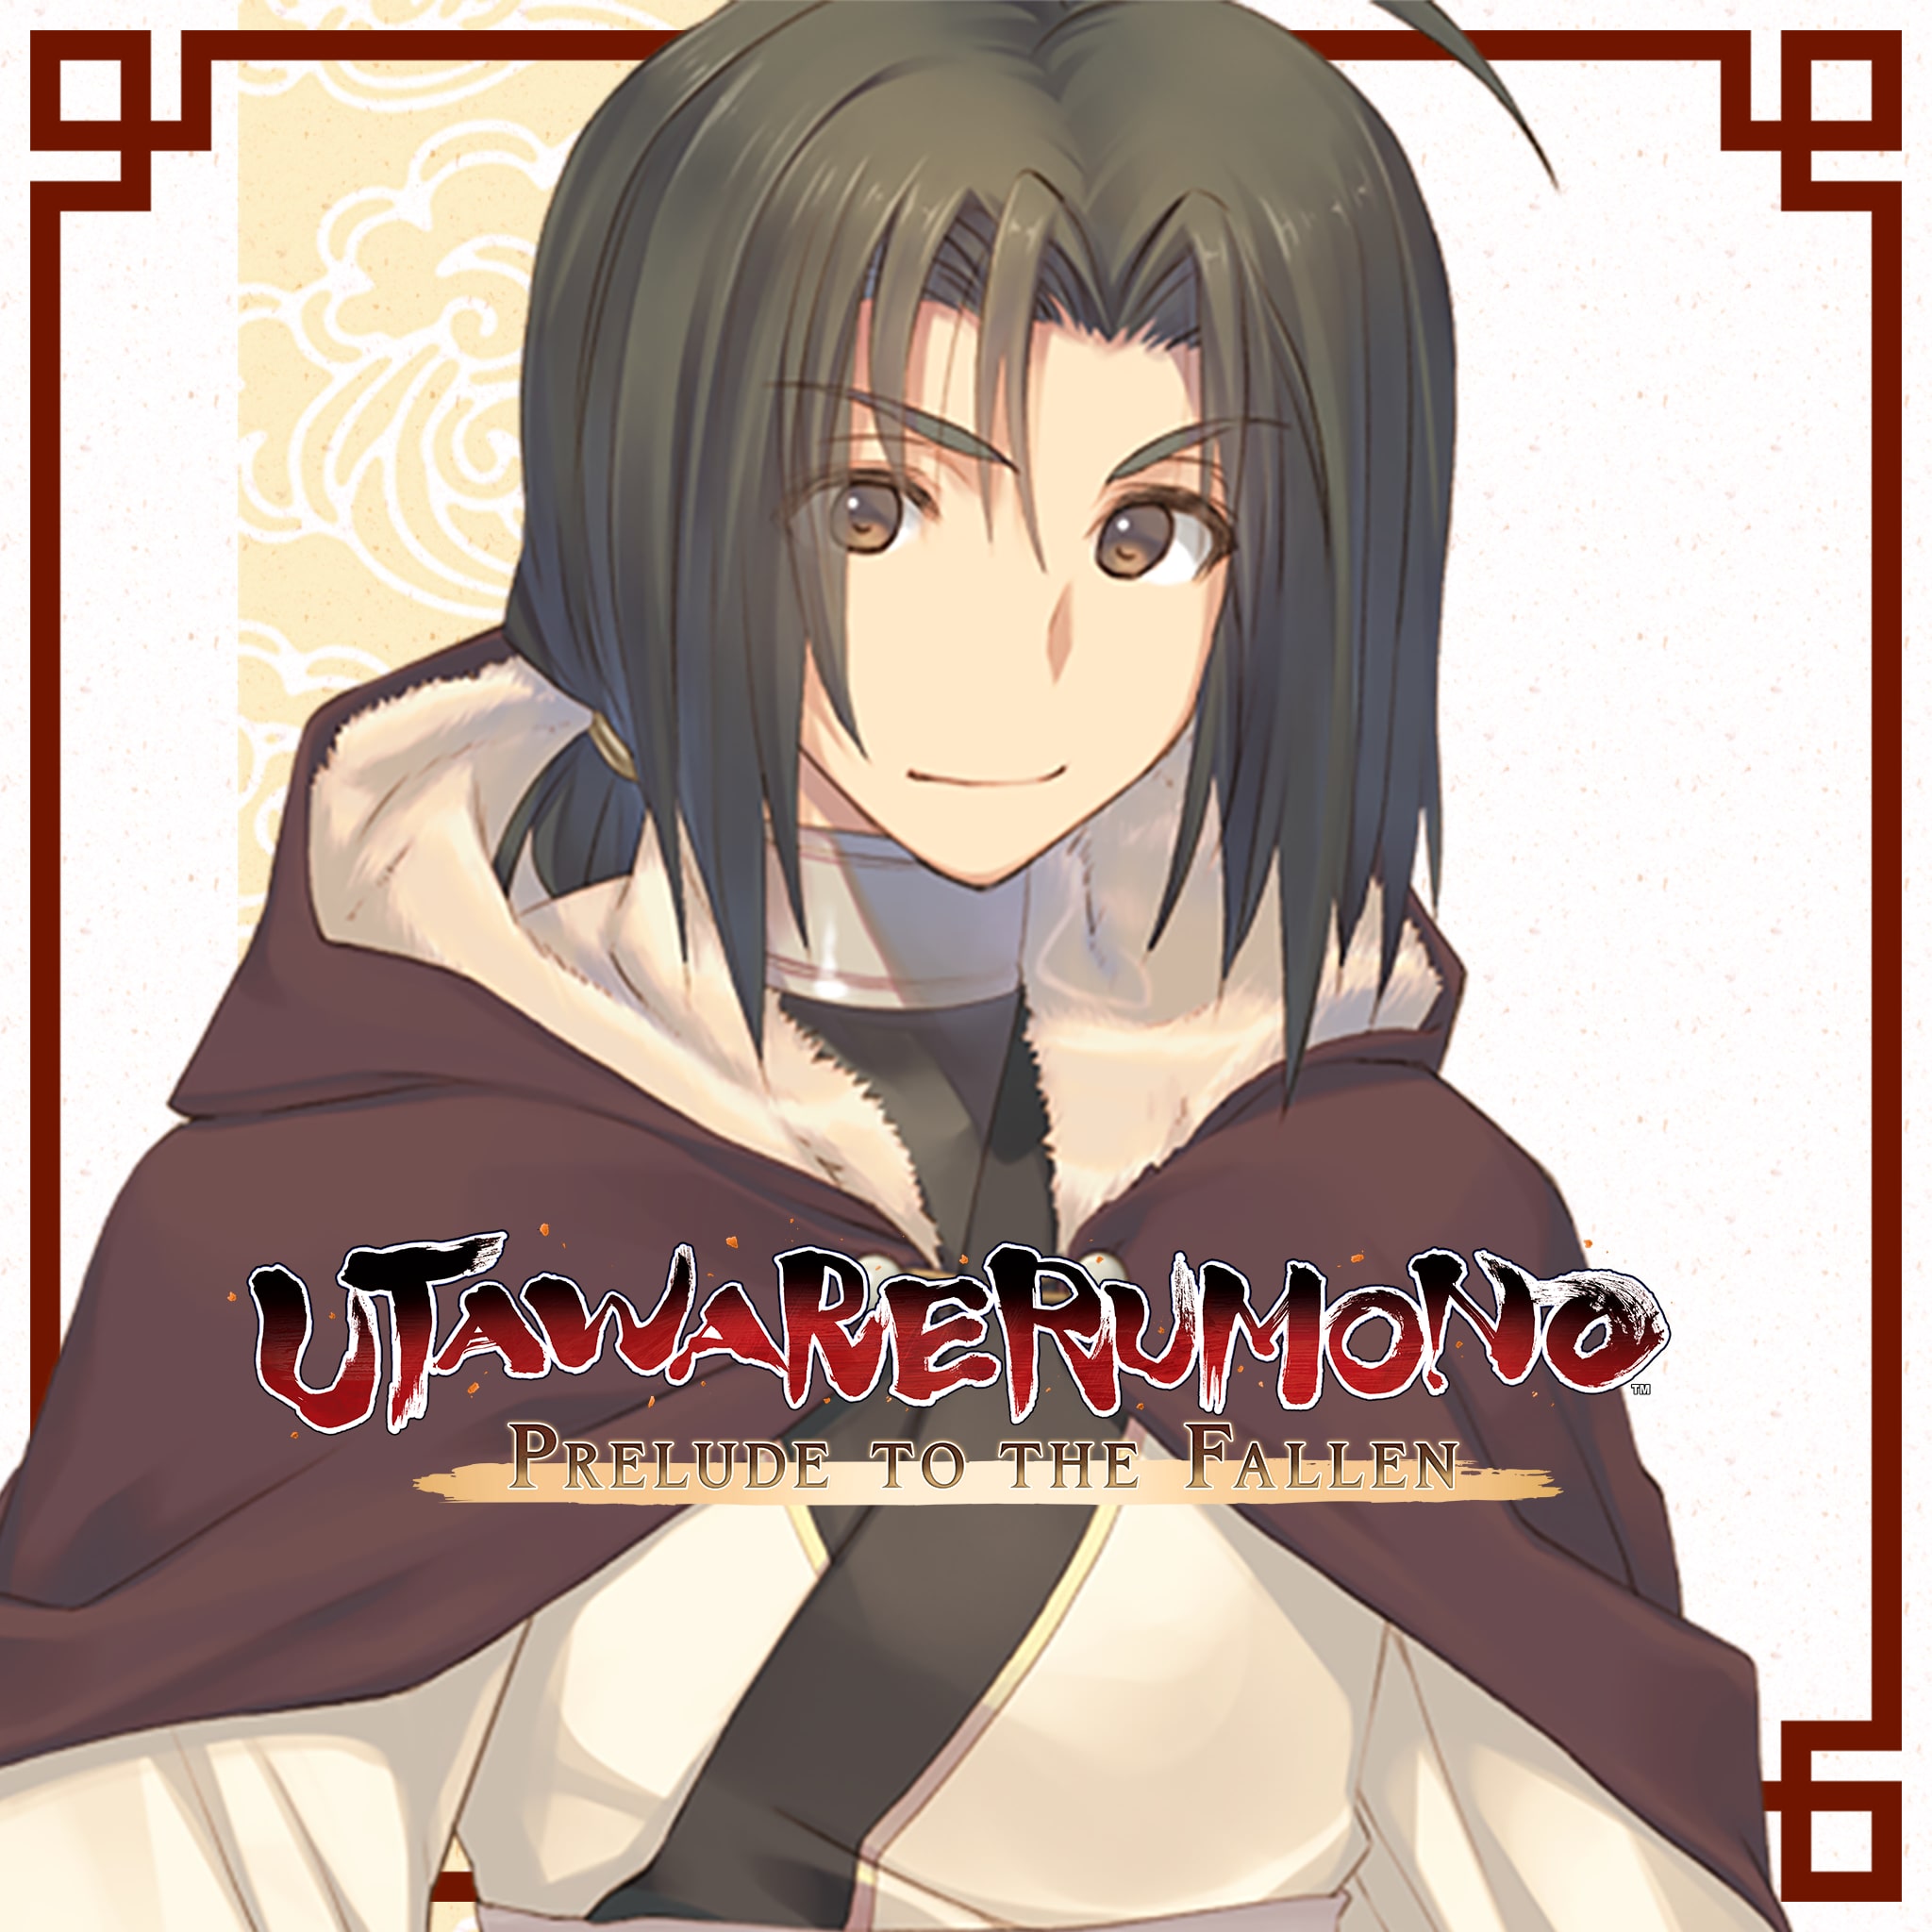 Utawarerumono: Prelude to the Fallen - DLC Character: Haku